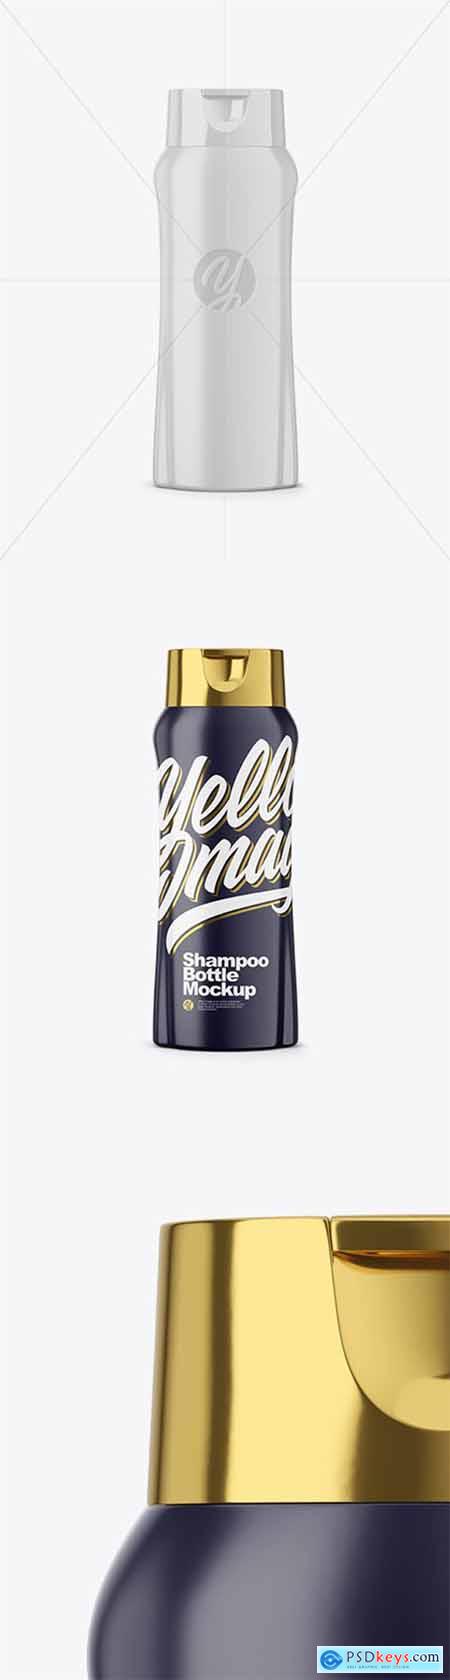 Shampoo Bottle Mockup 37510